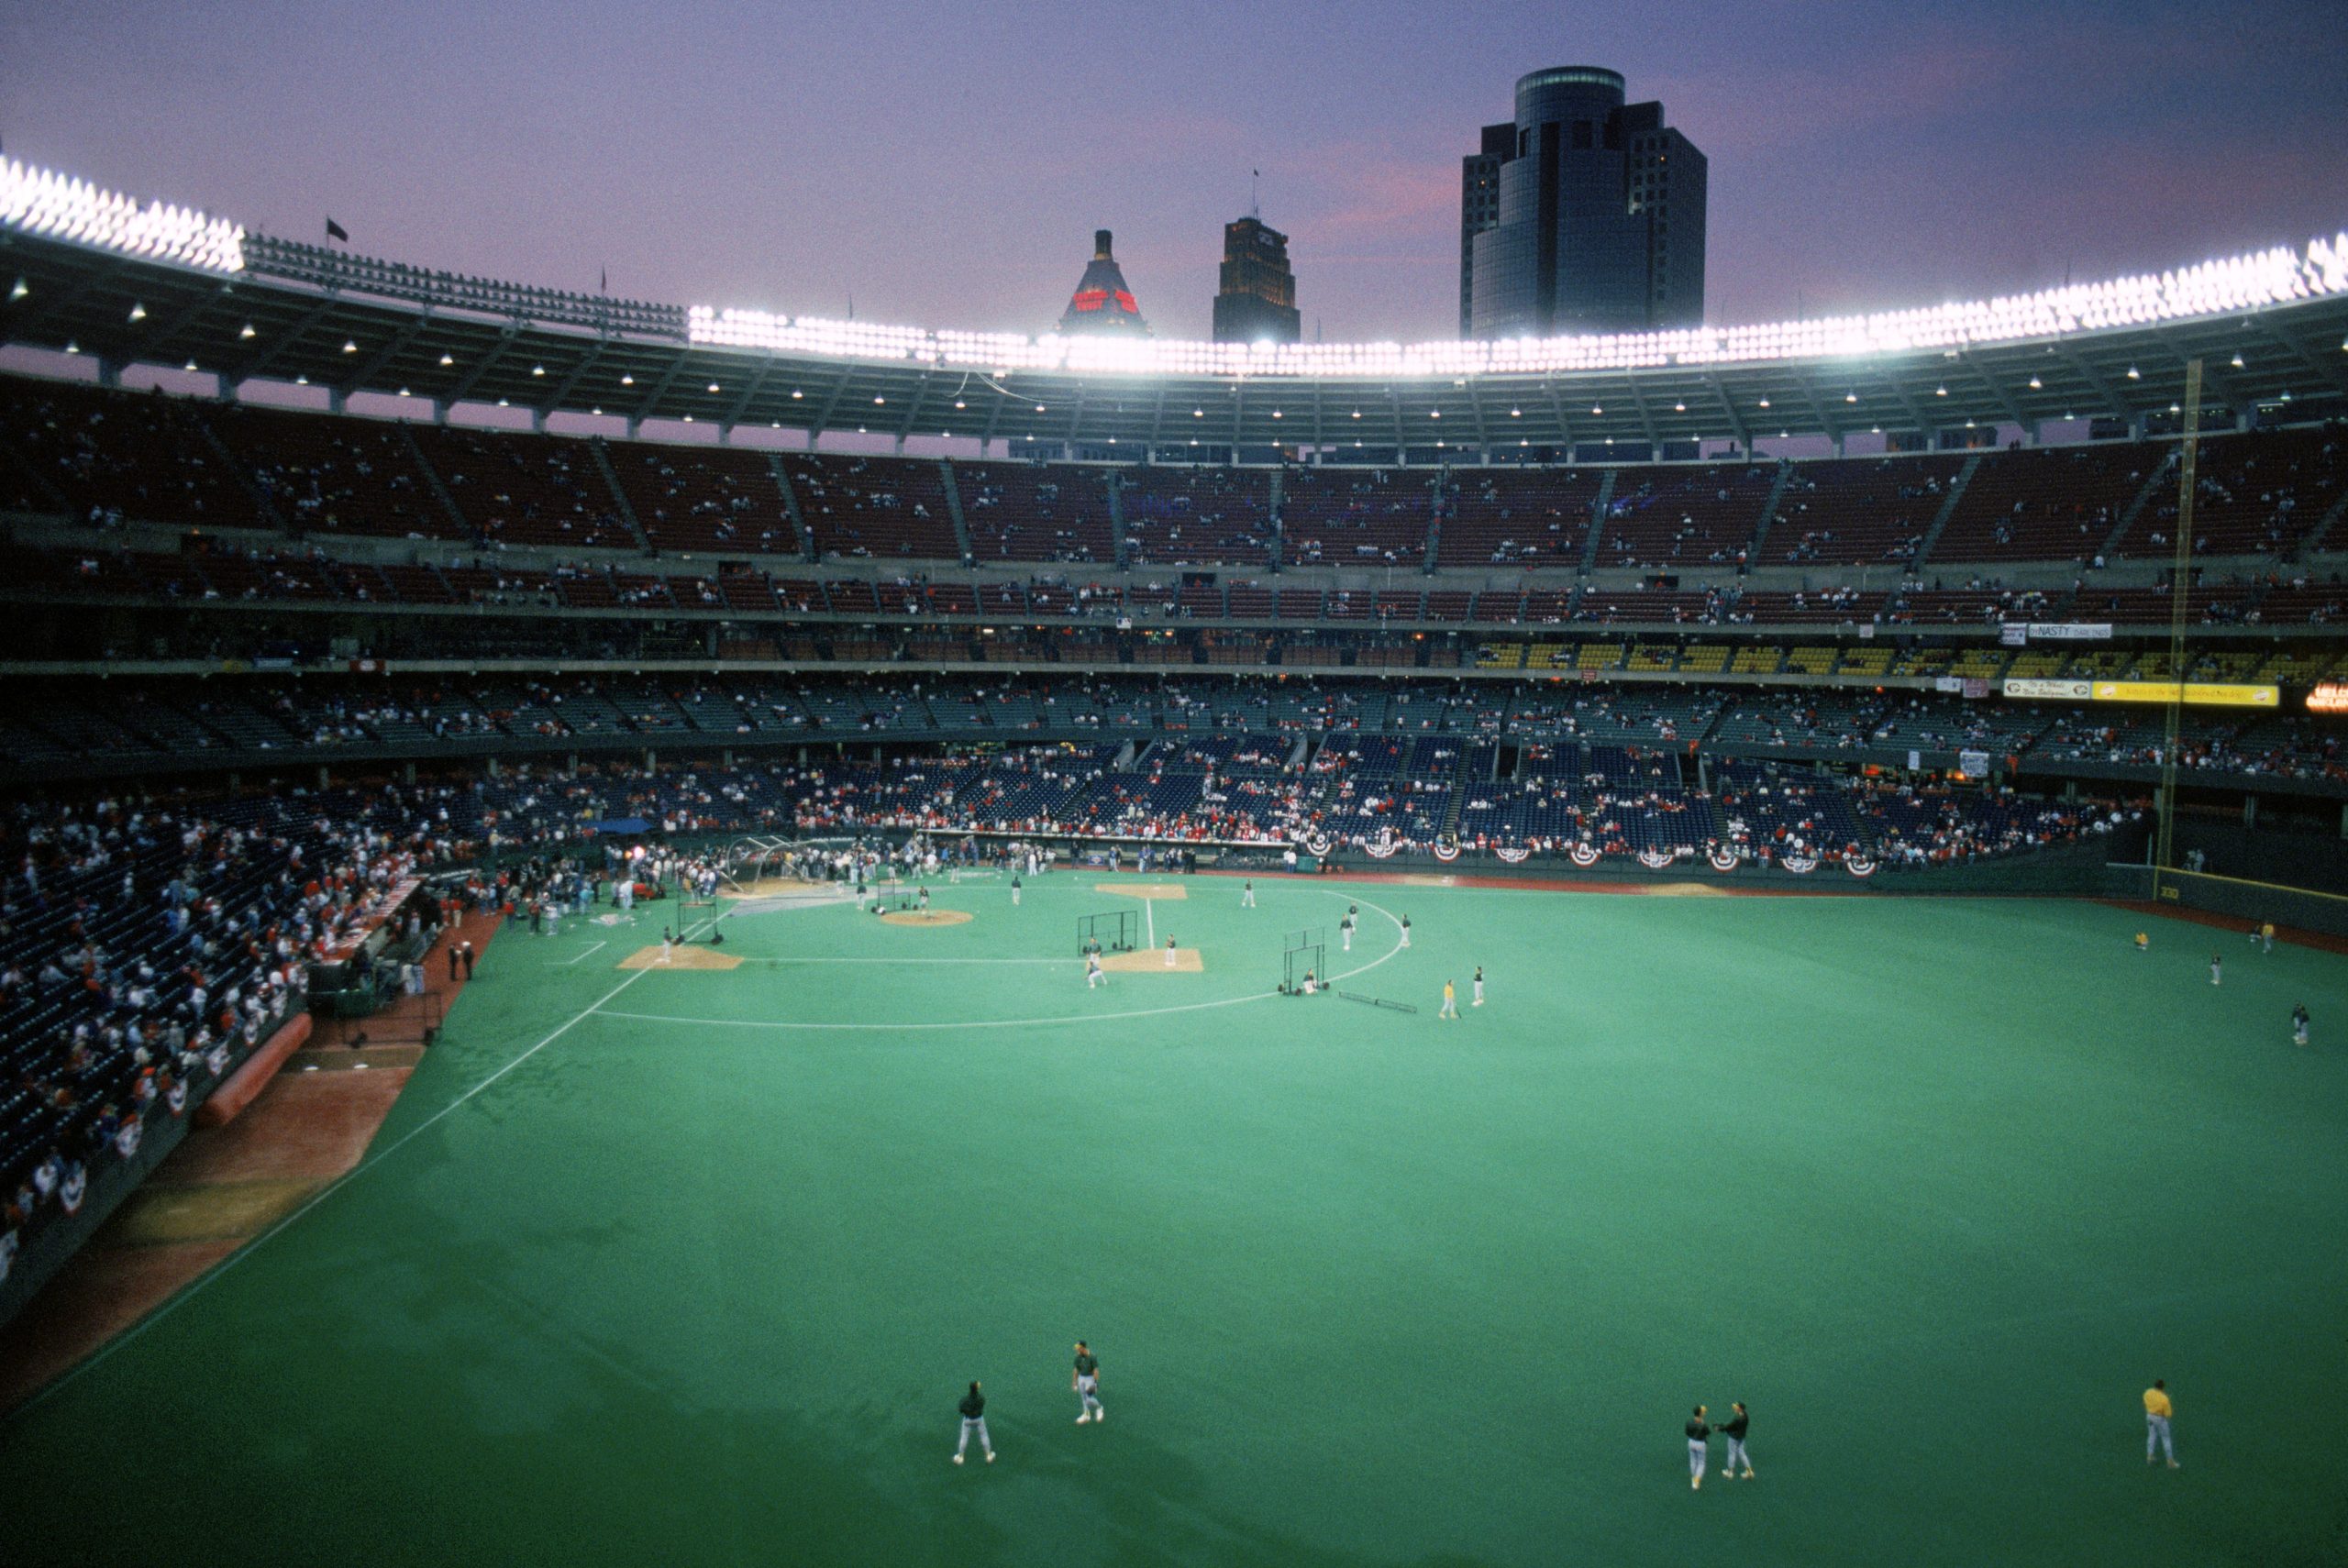 1990 World Series